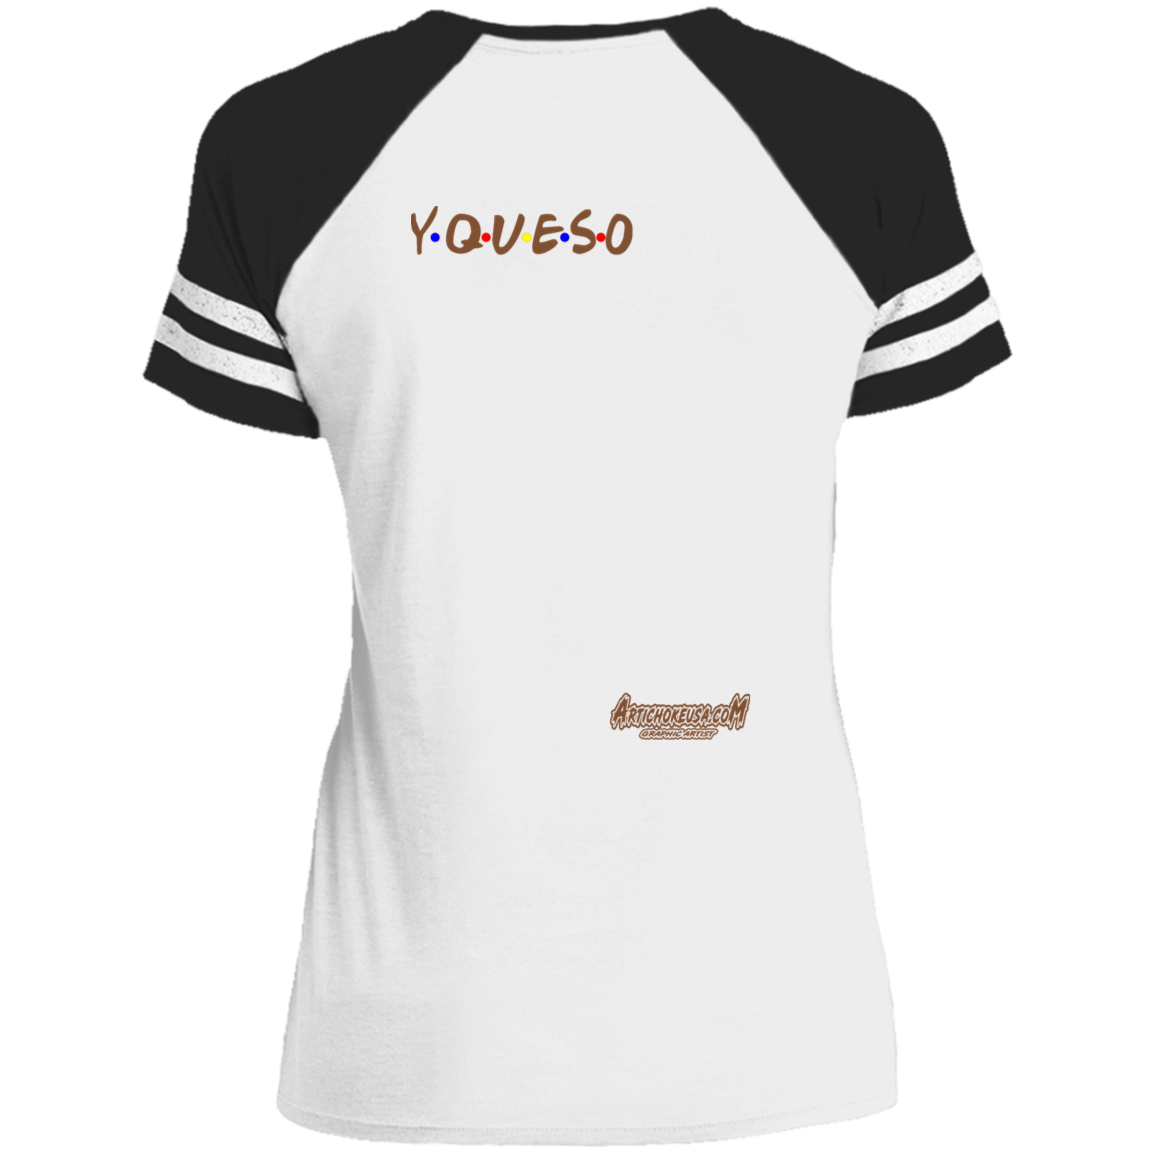 ArtichokeUSA Custom Design. FRIJOLE (CON QUESO). Ladies' Game V-Neck T-Shirt